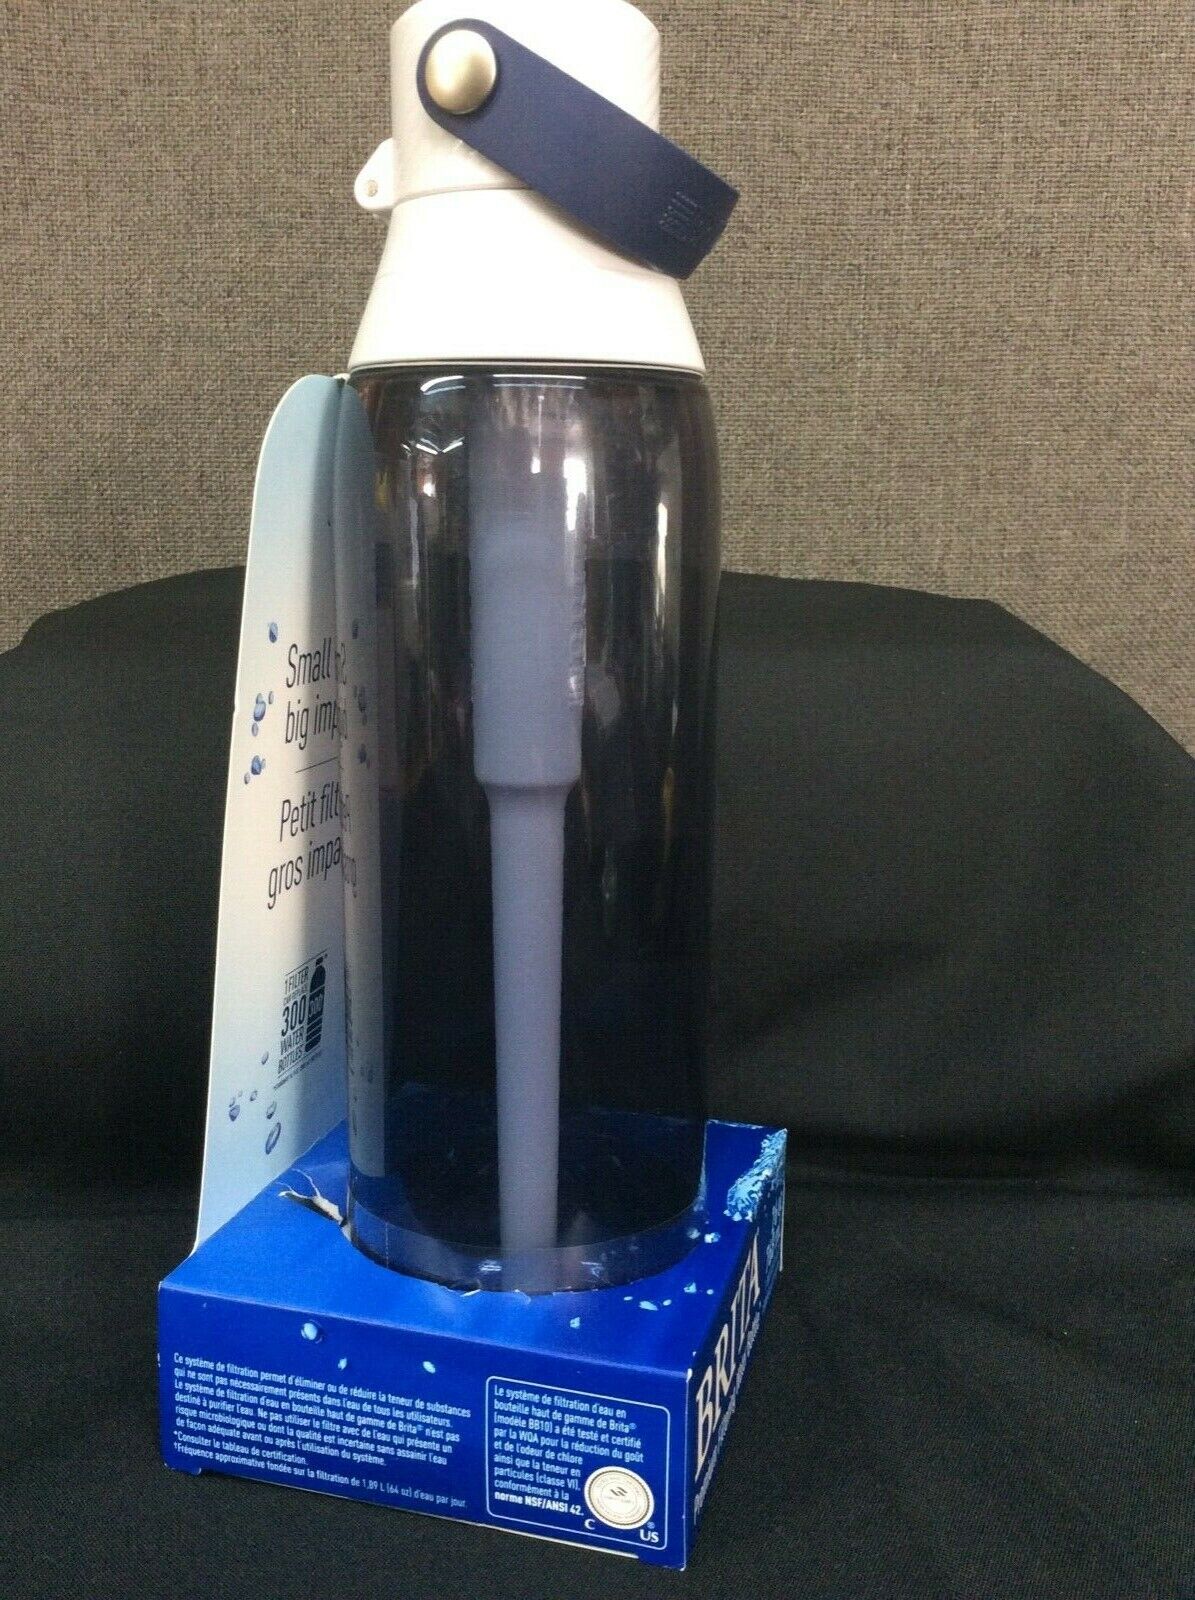 Brita Water Bottle, Premium Filtering 26 Ounce